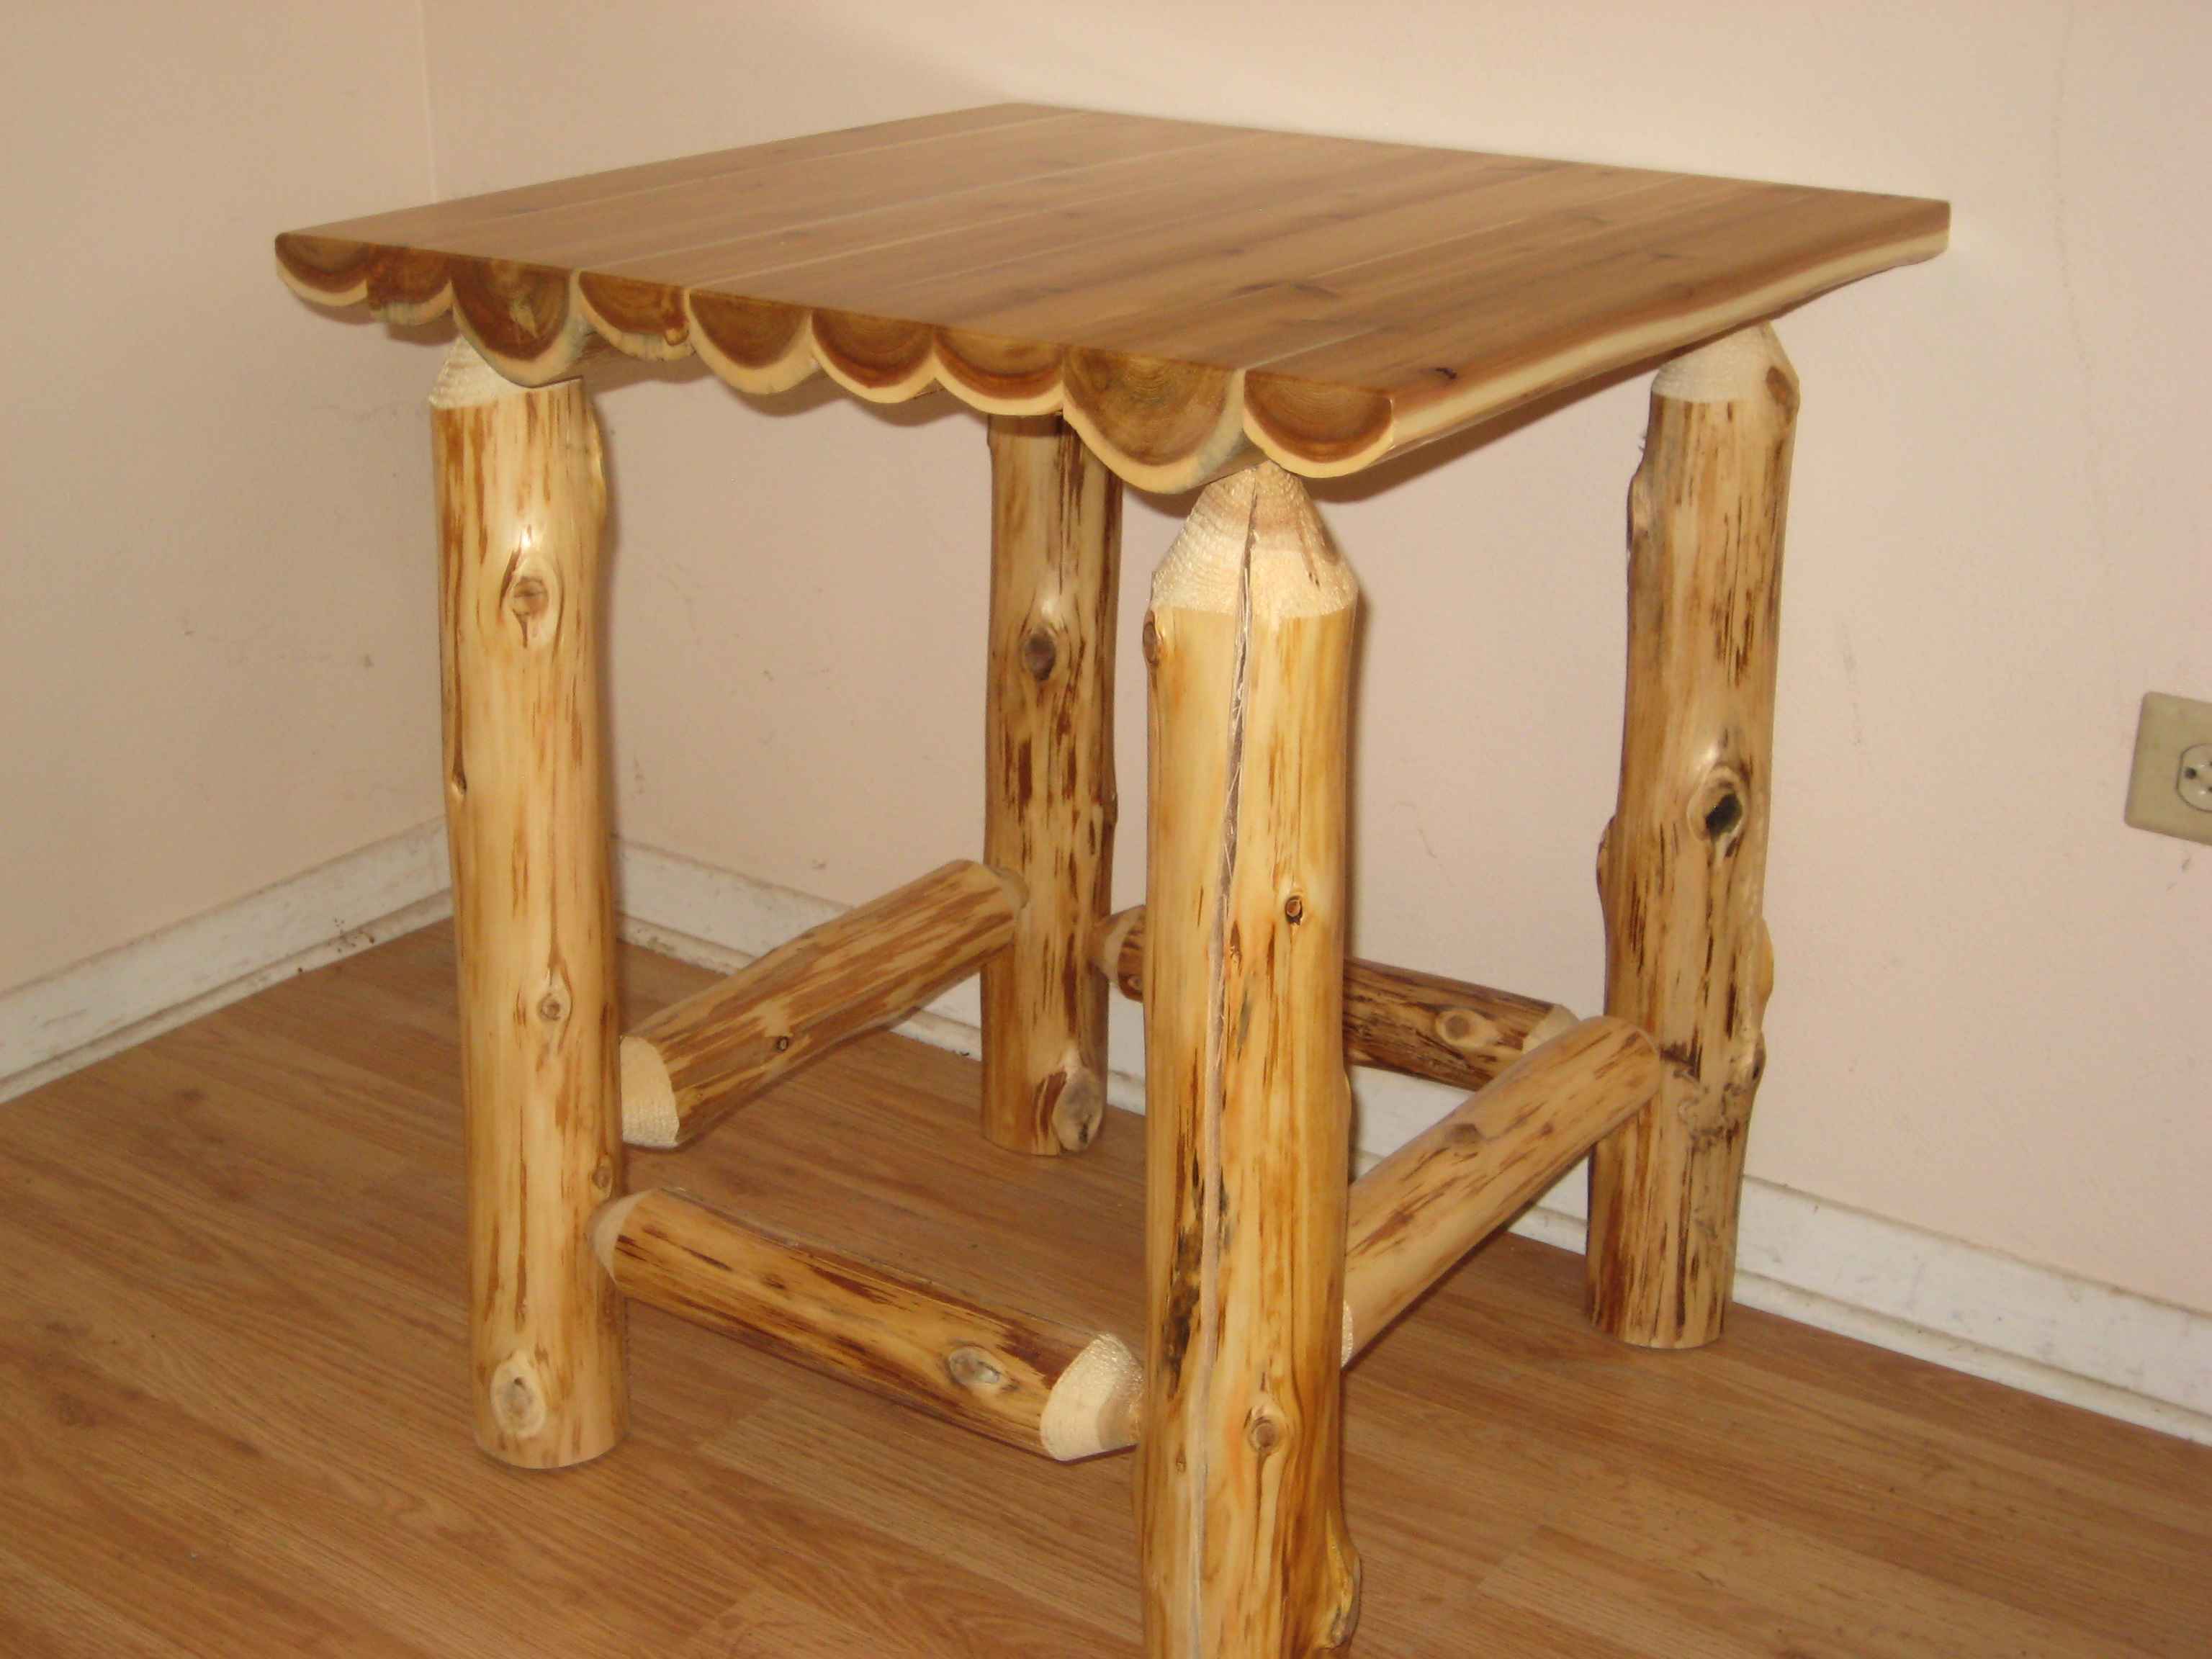 New Log End Table